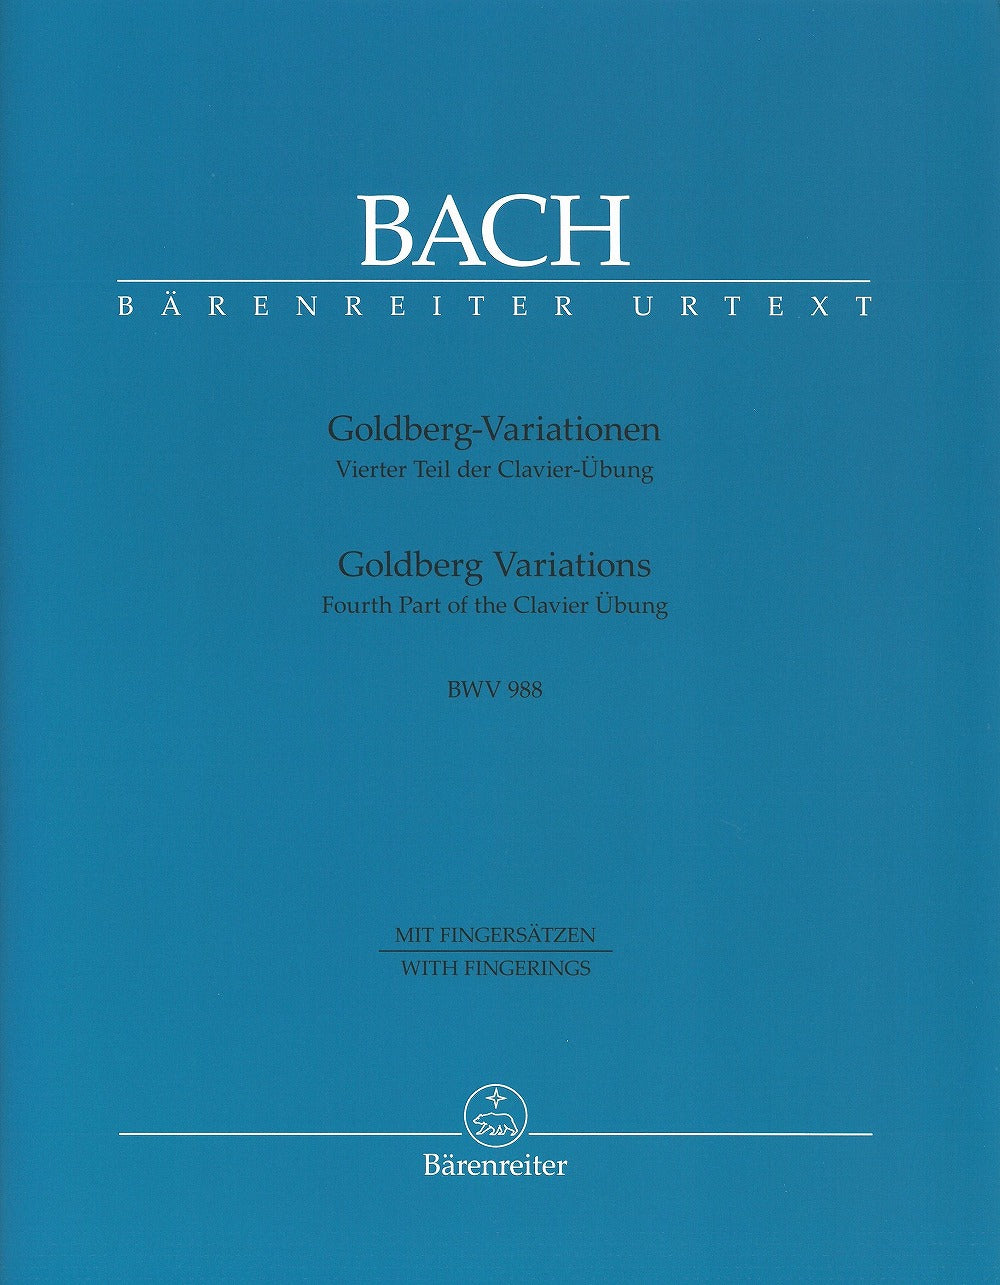 Goldberg-Variationen BWV 988 * mit Fingersaetzen - ゴールド 